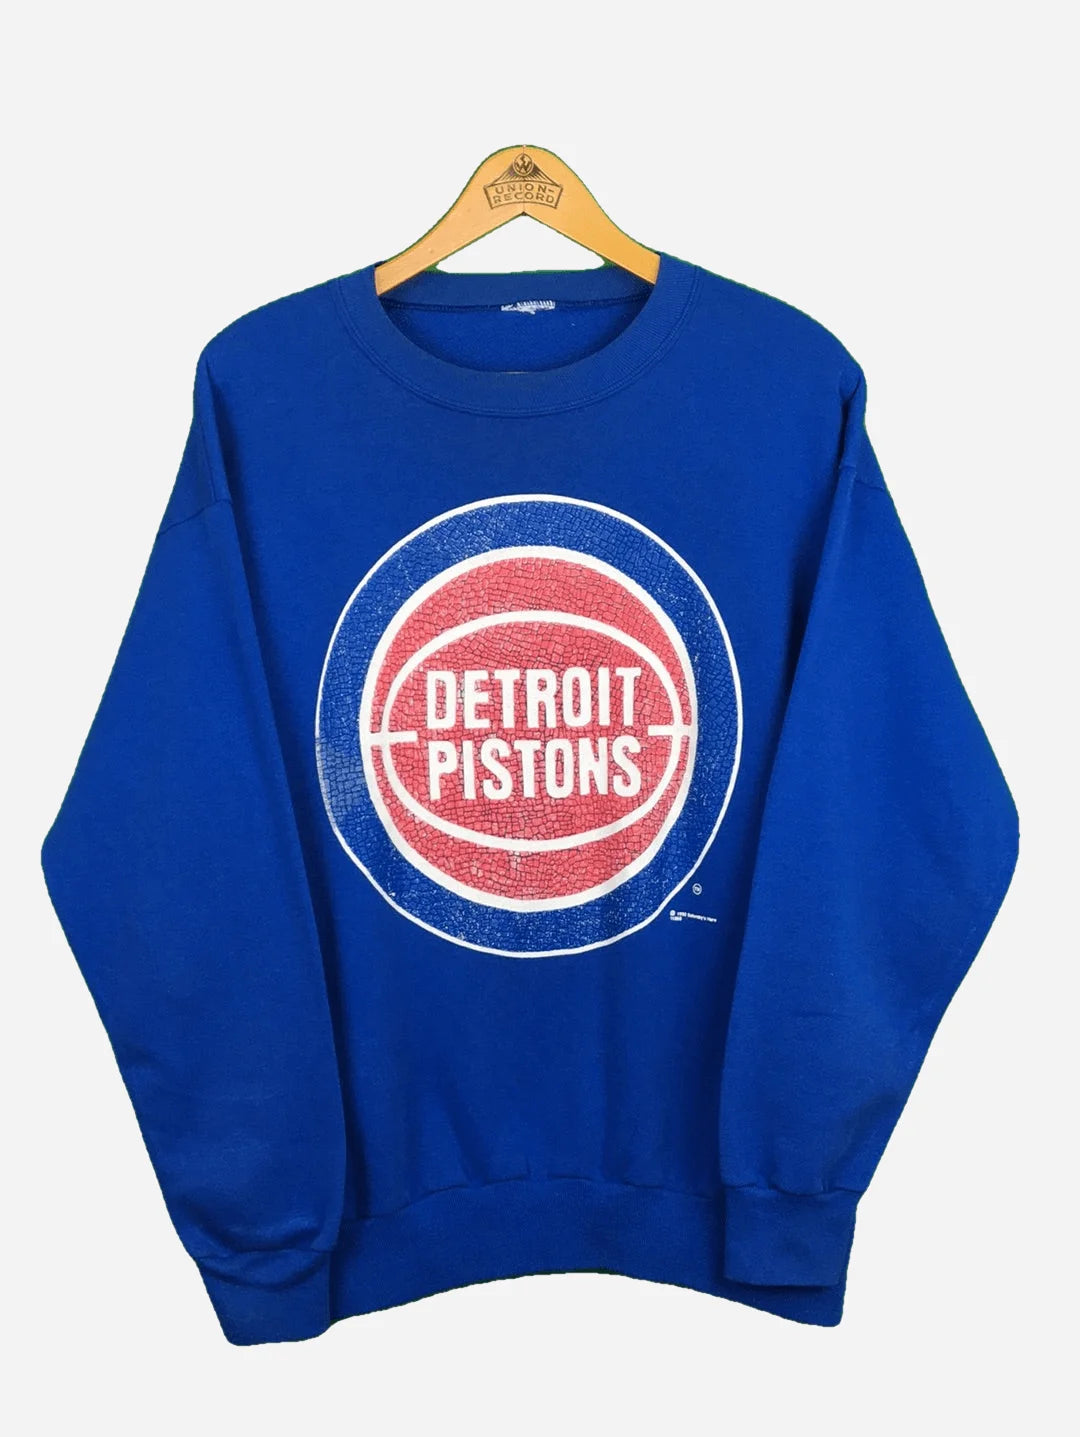 „Detroit Pistons" 1994 Sweater (M)